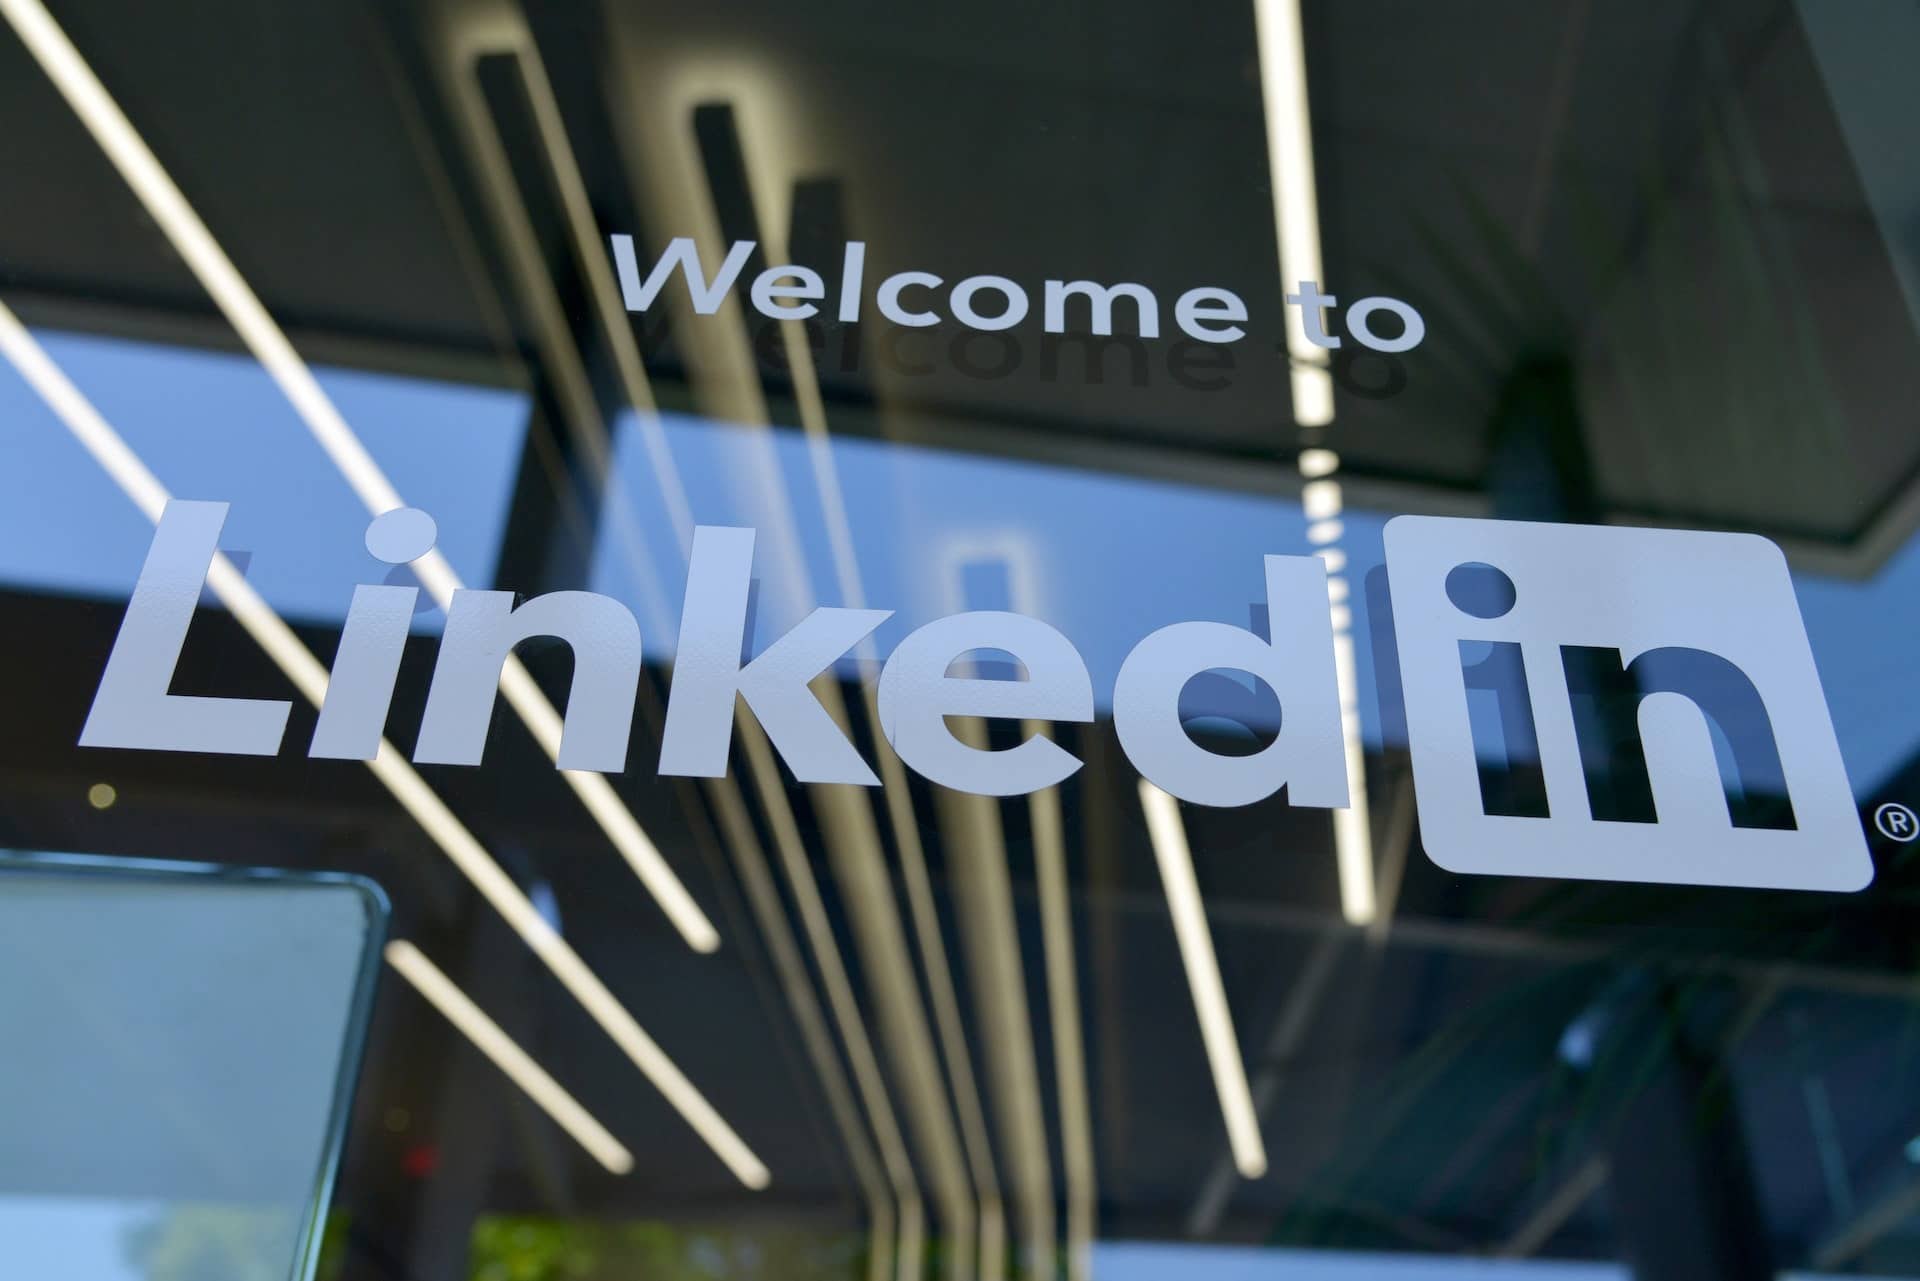 Buscar empresas en Linkedin Increnta